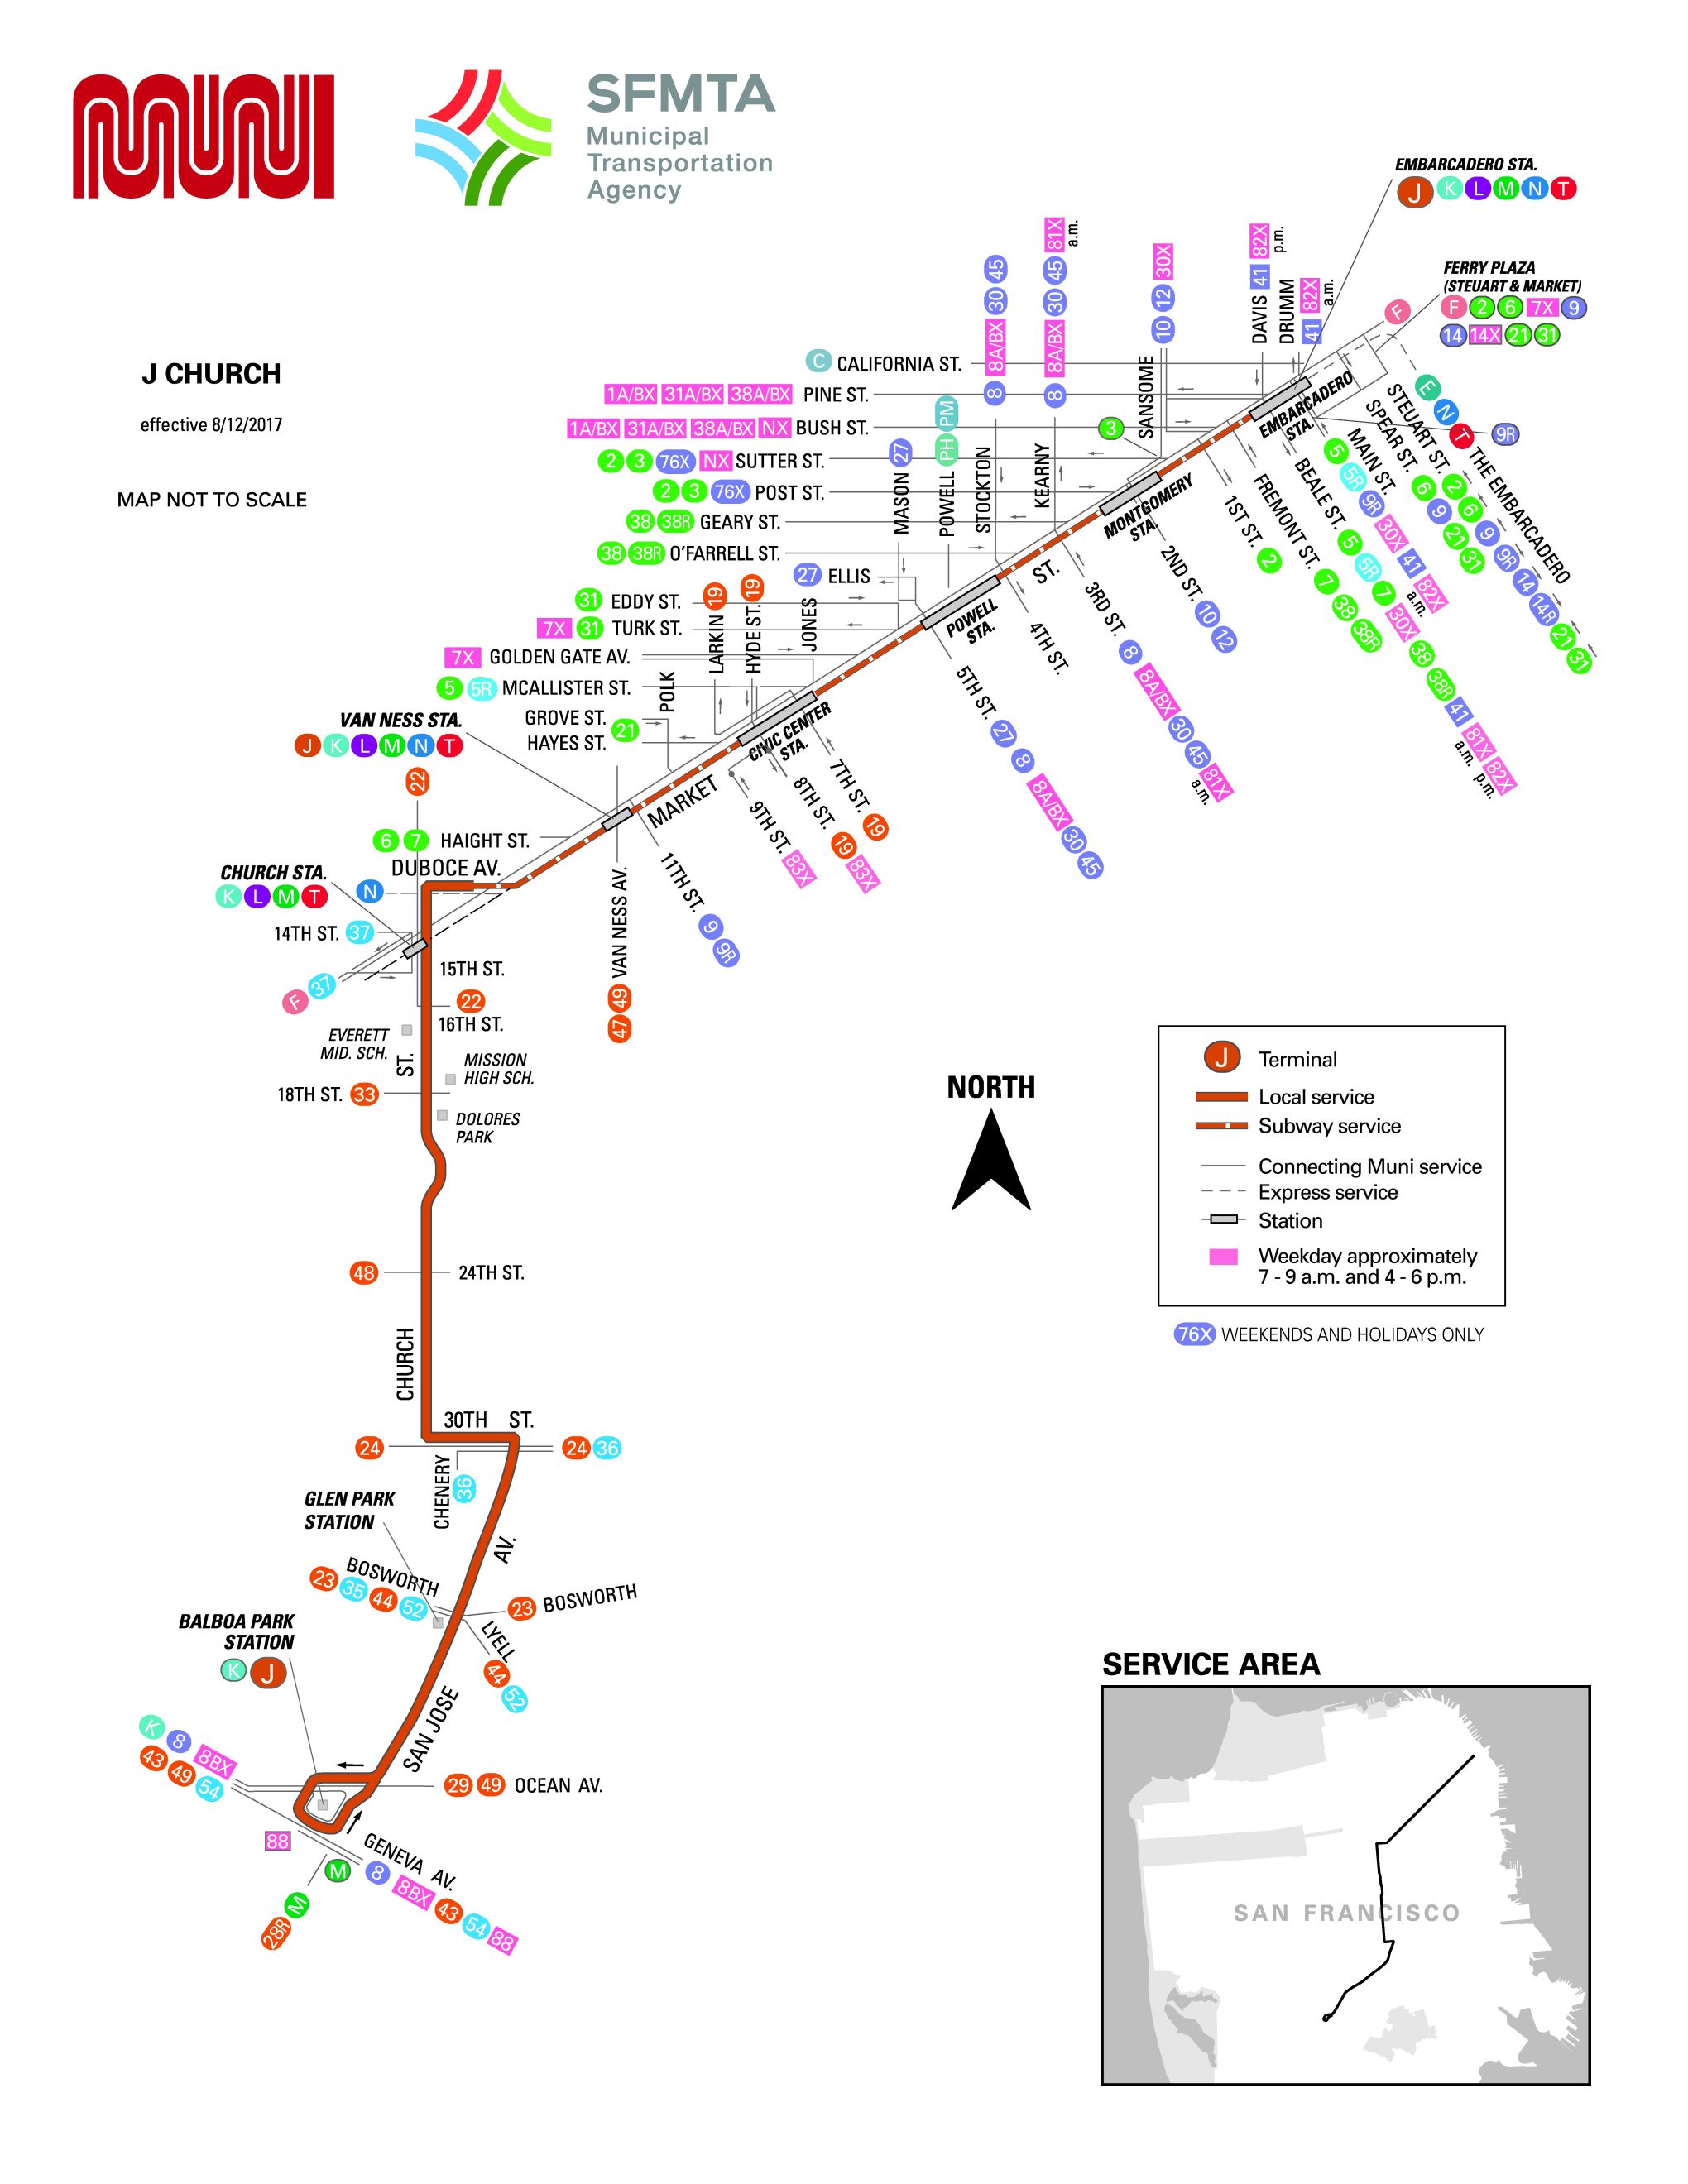 j-church streetcar route - sf muni - sf bay transit